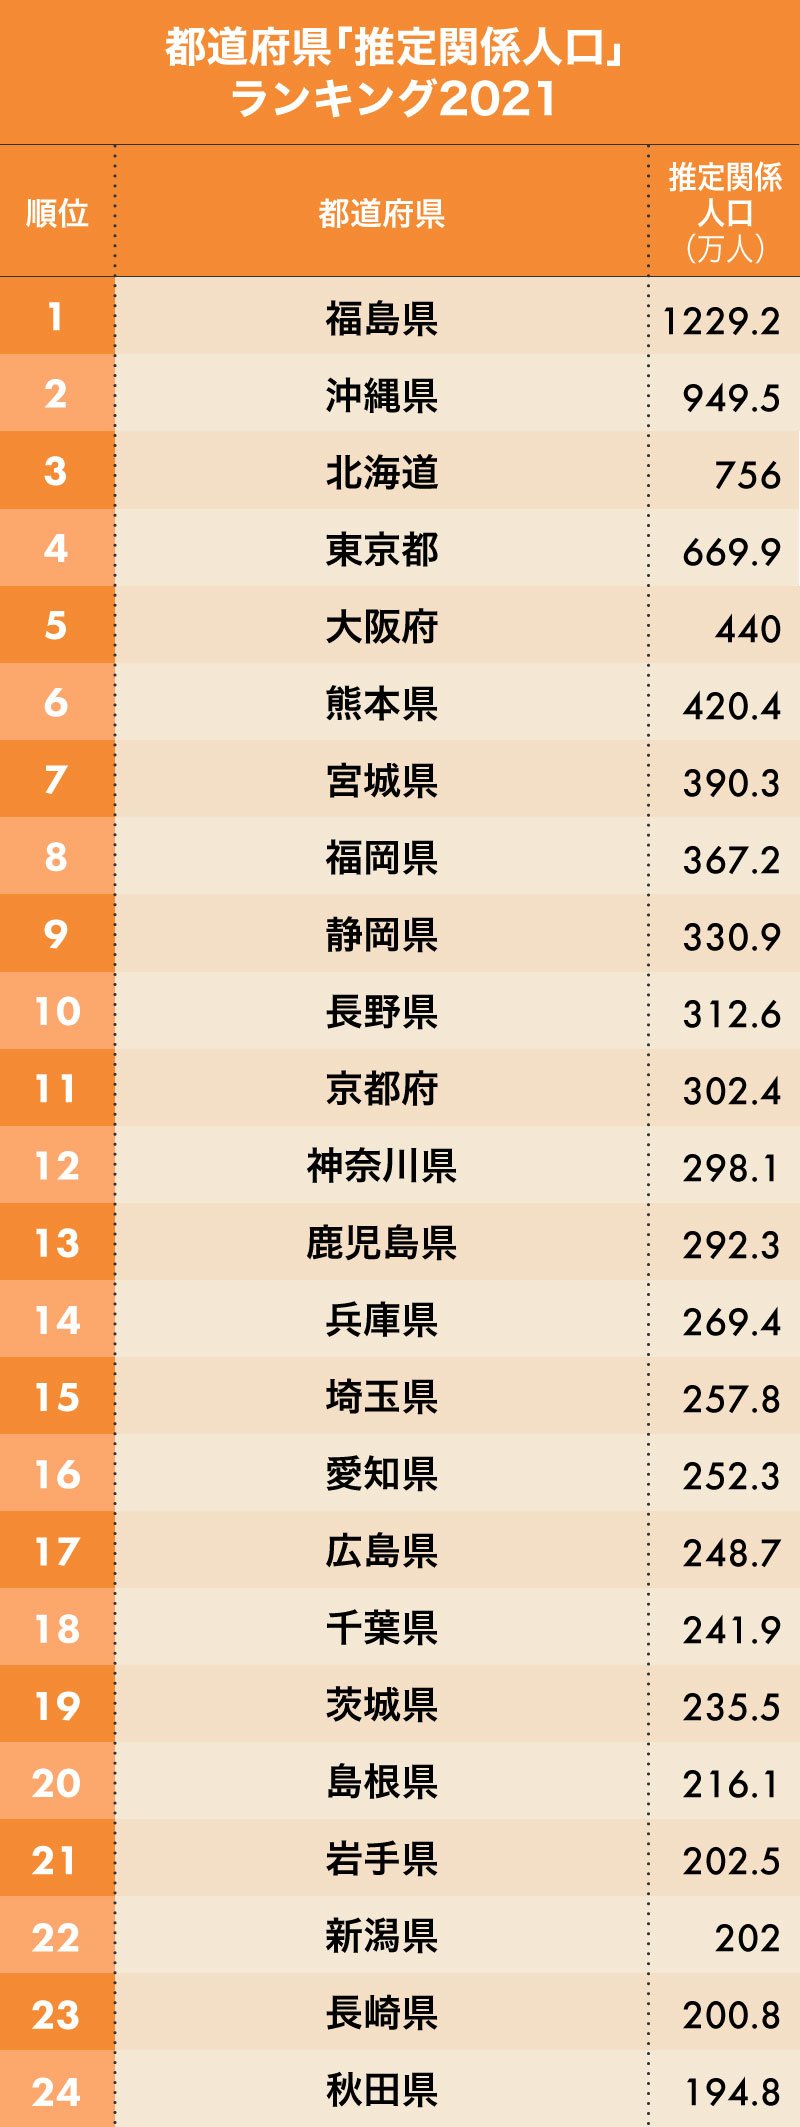 都道府県「推定関係人口」ランキング1位～24位